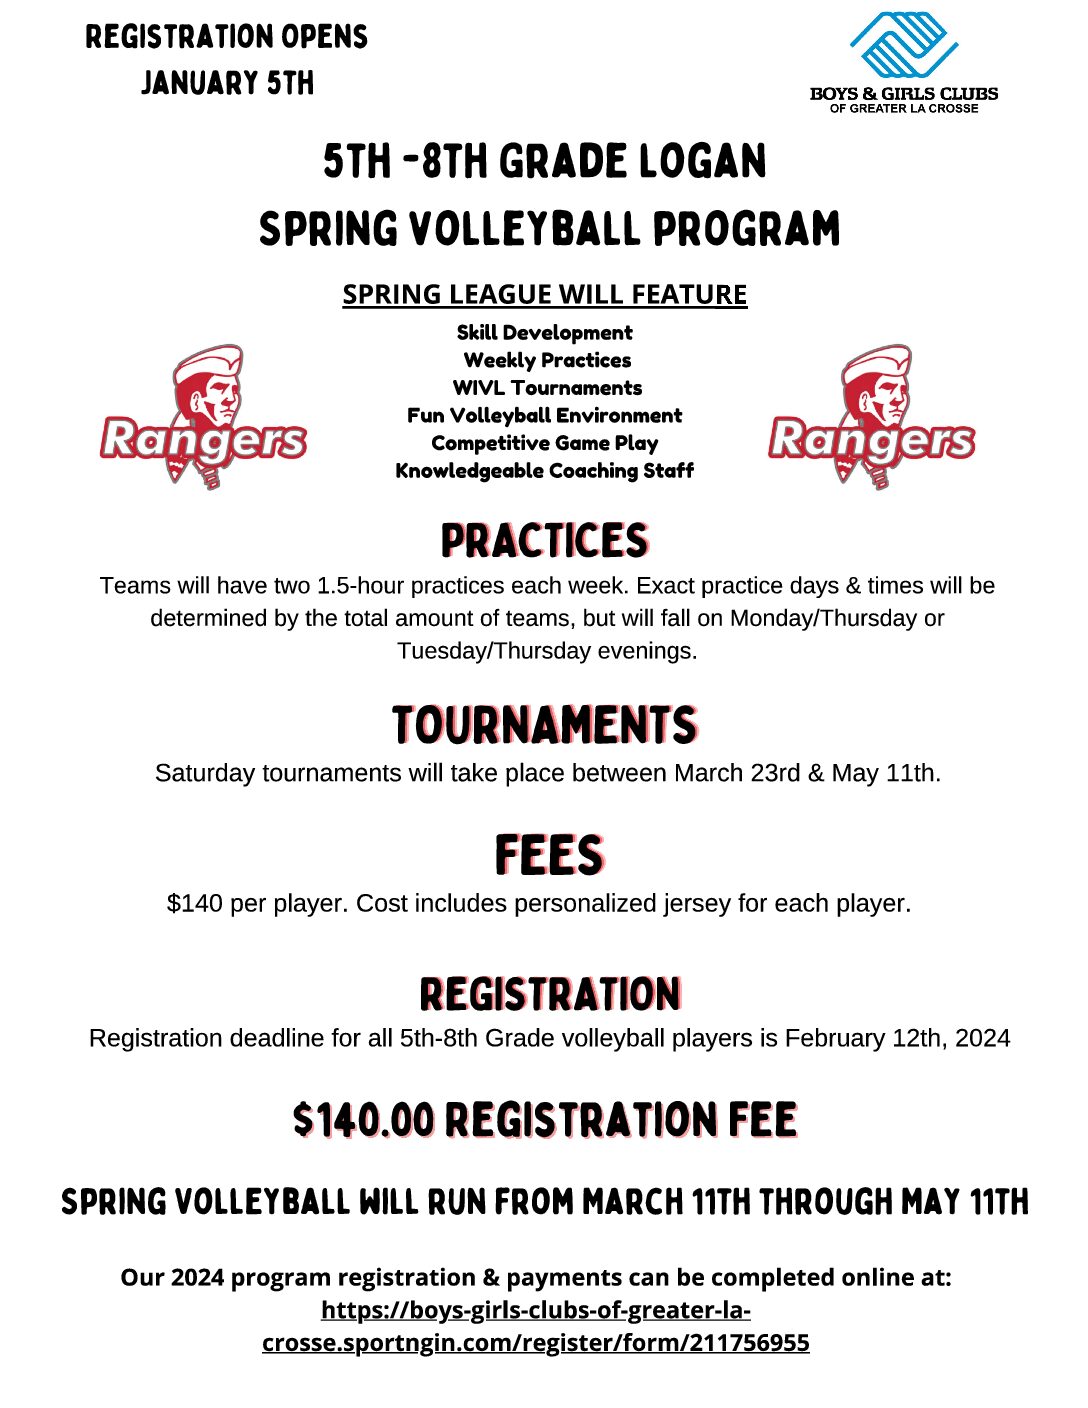 Logan Spring Volleyball Program